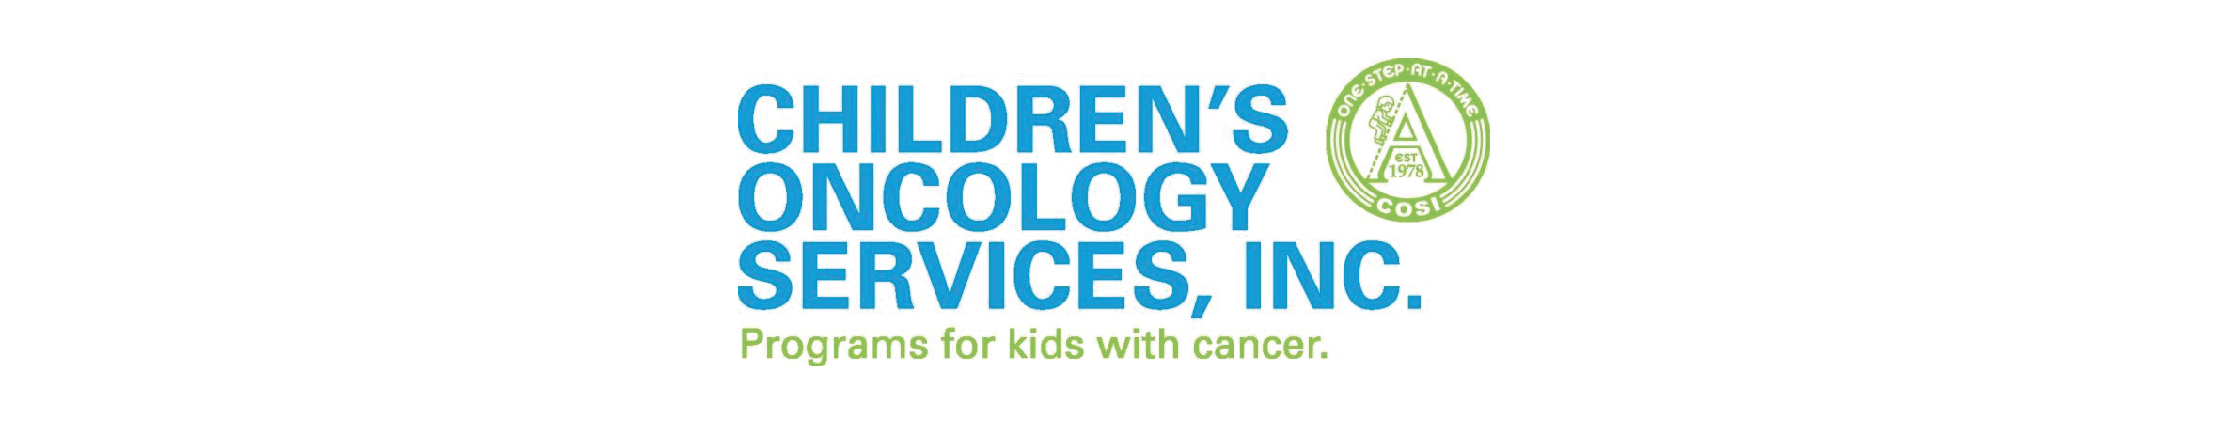 Children's oncology services inc. logo